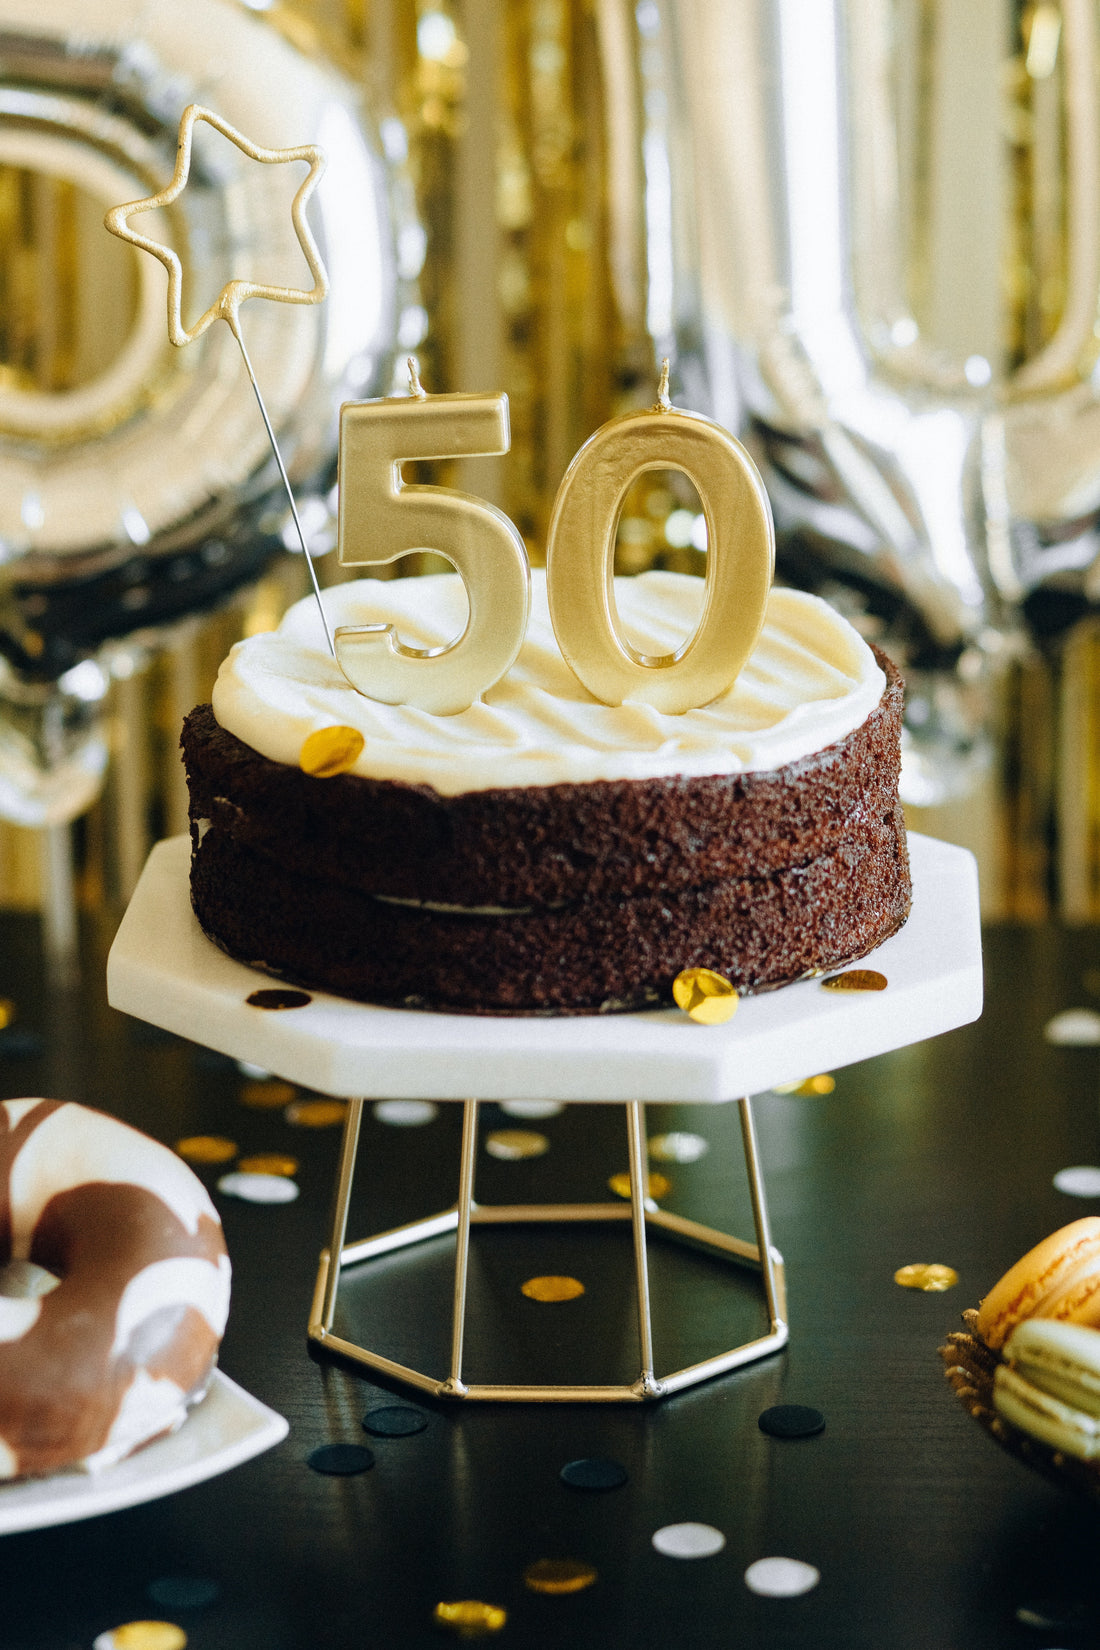 50th Birthday Ideas for Men: Celebrating a Milestone